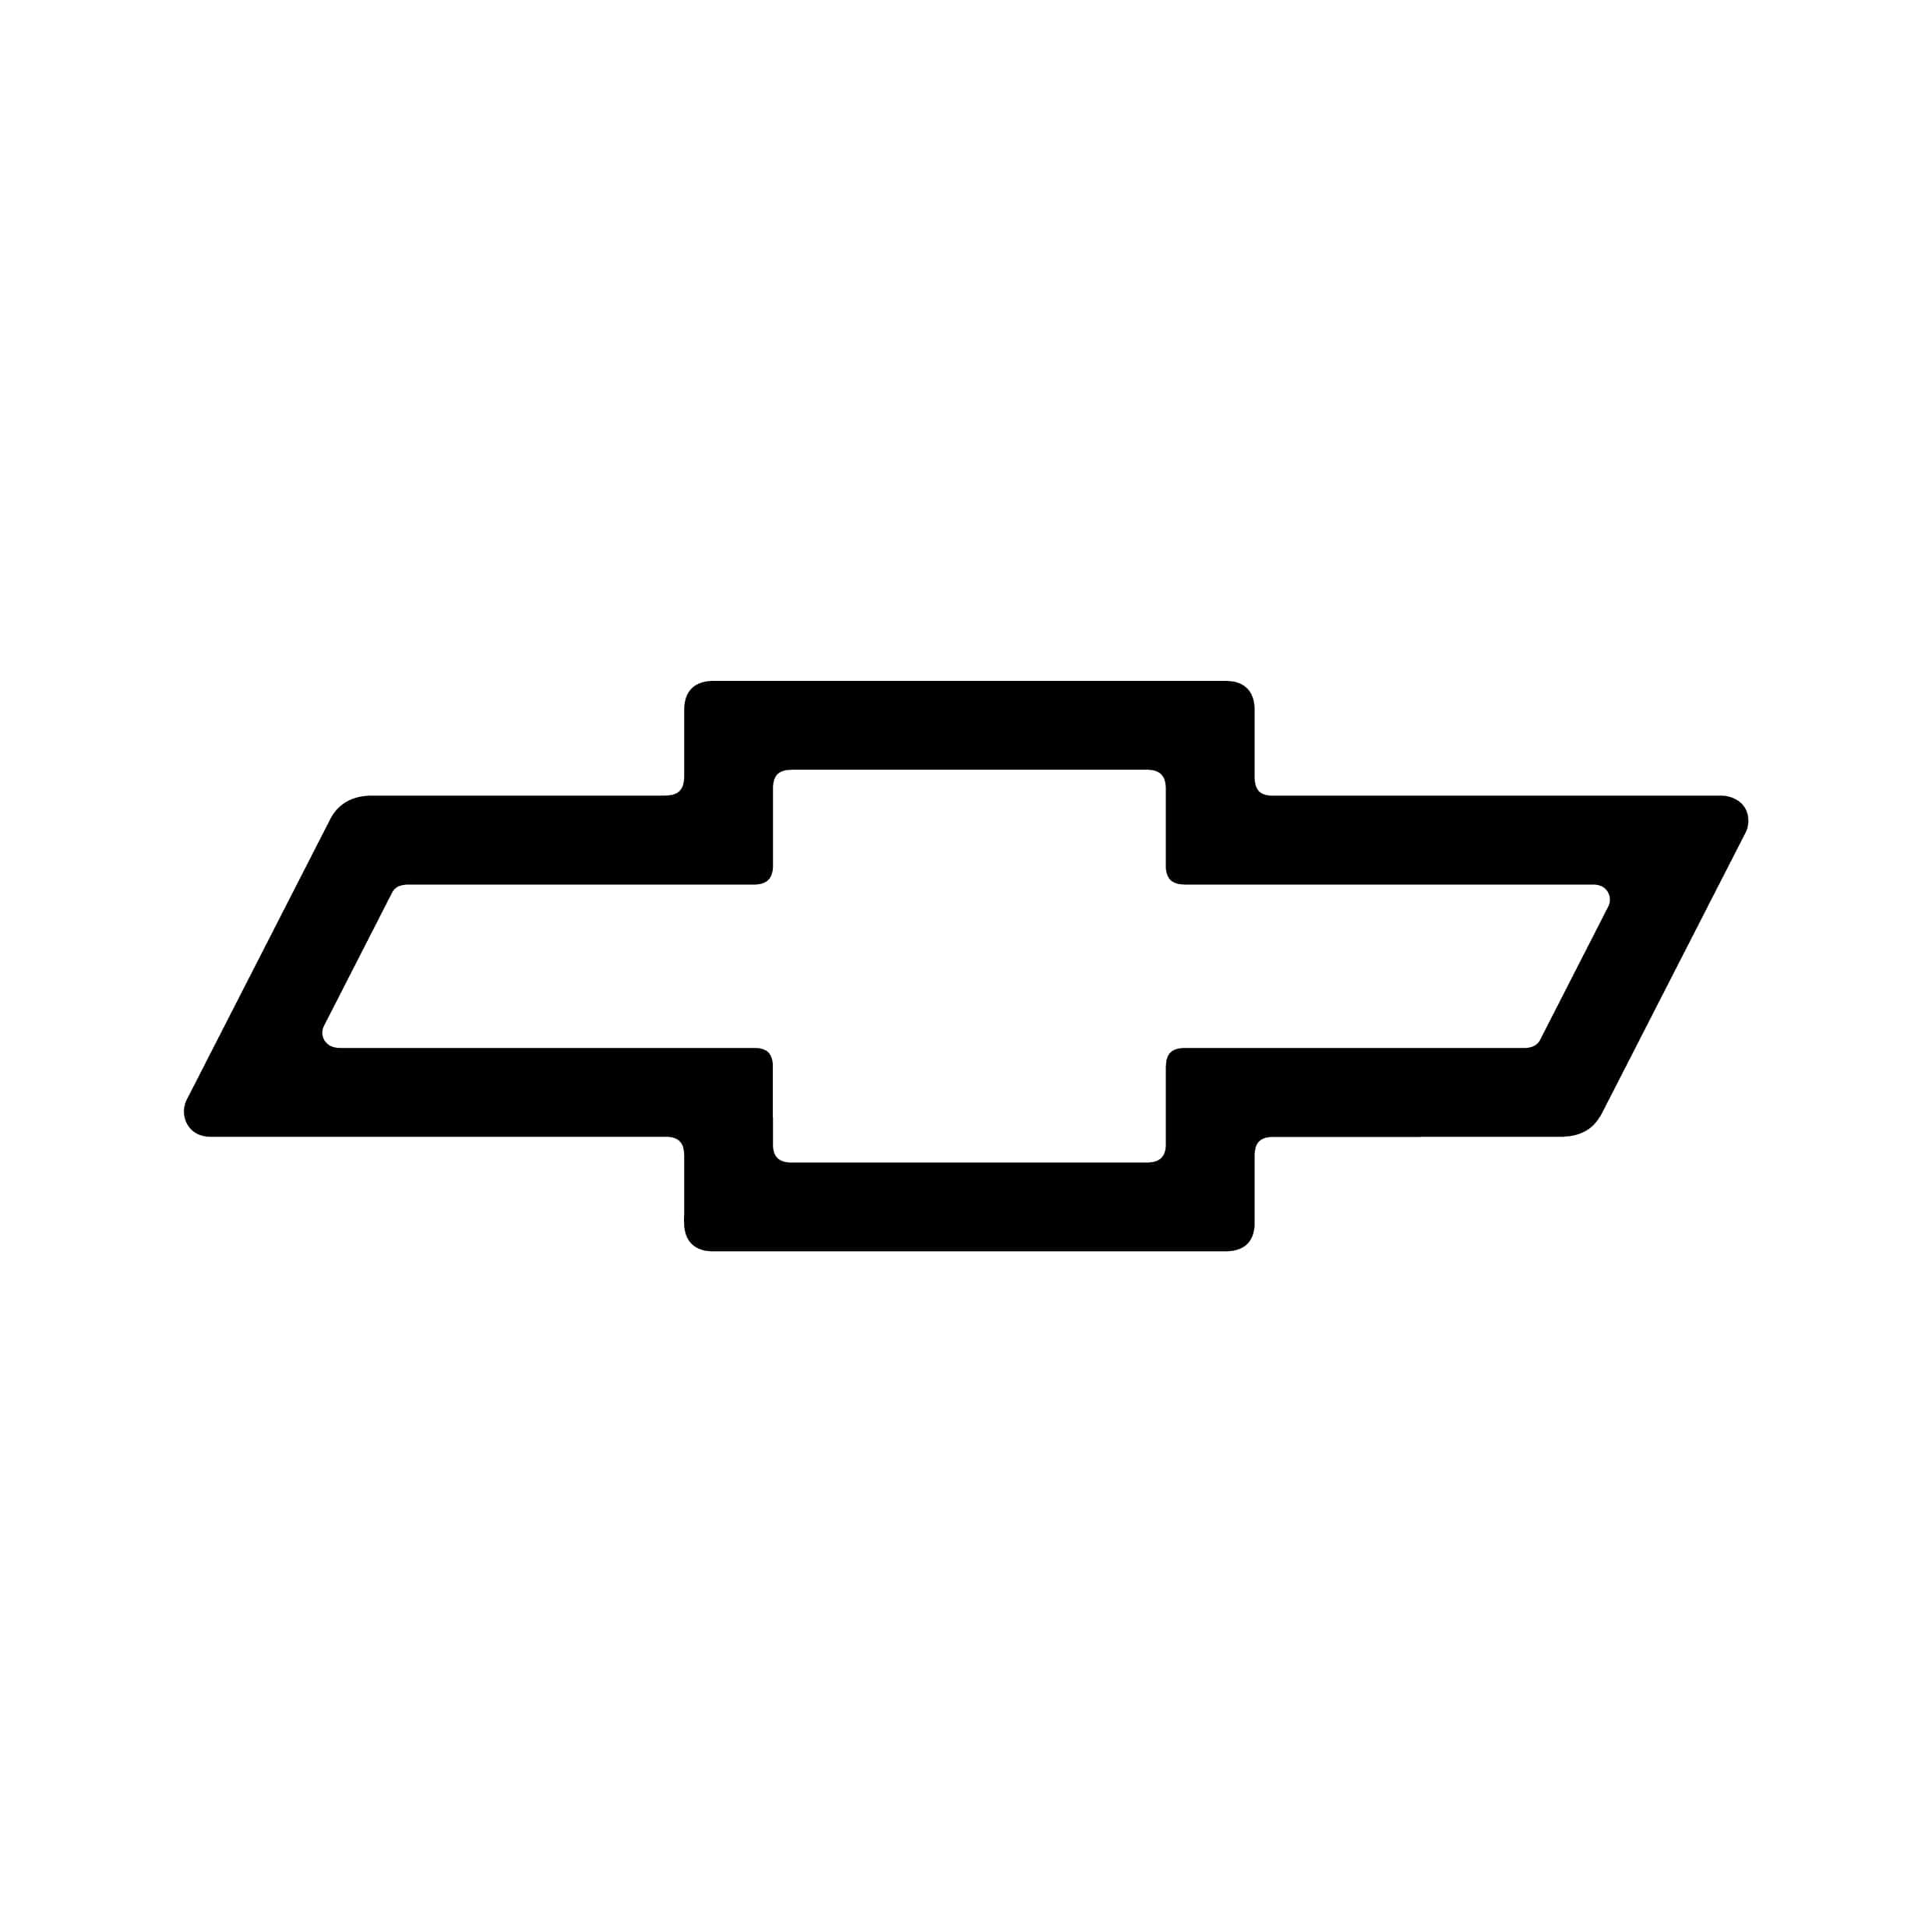 stickers-chevrolet-ref3-autocollant-voiture-sticker-auto-autocollants-decals-sponsors-racing-tuning